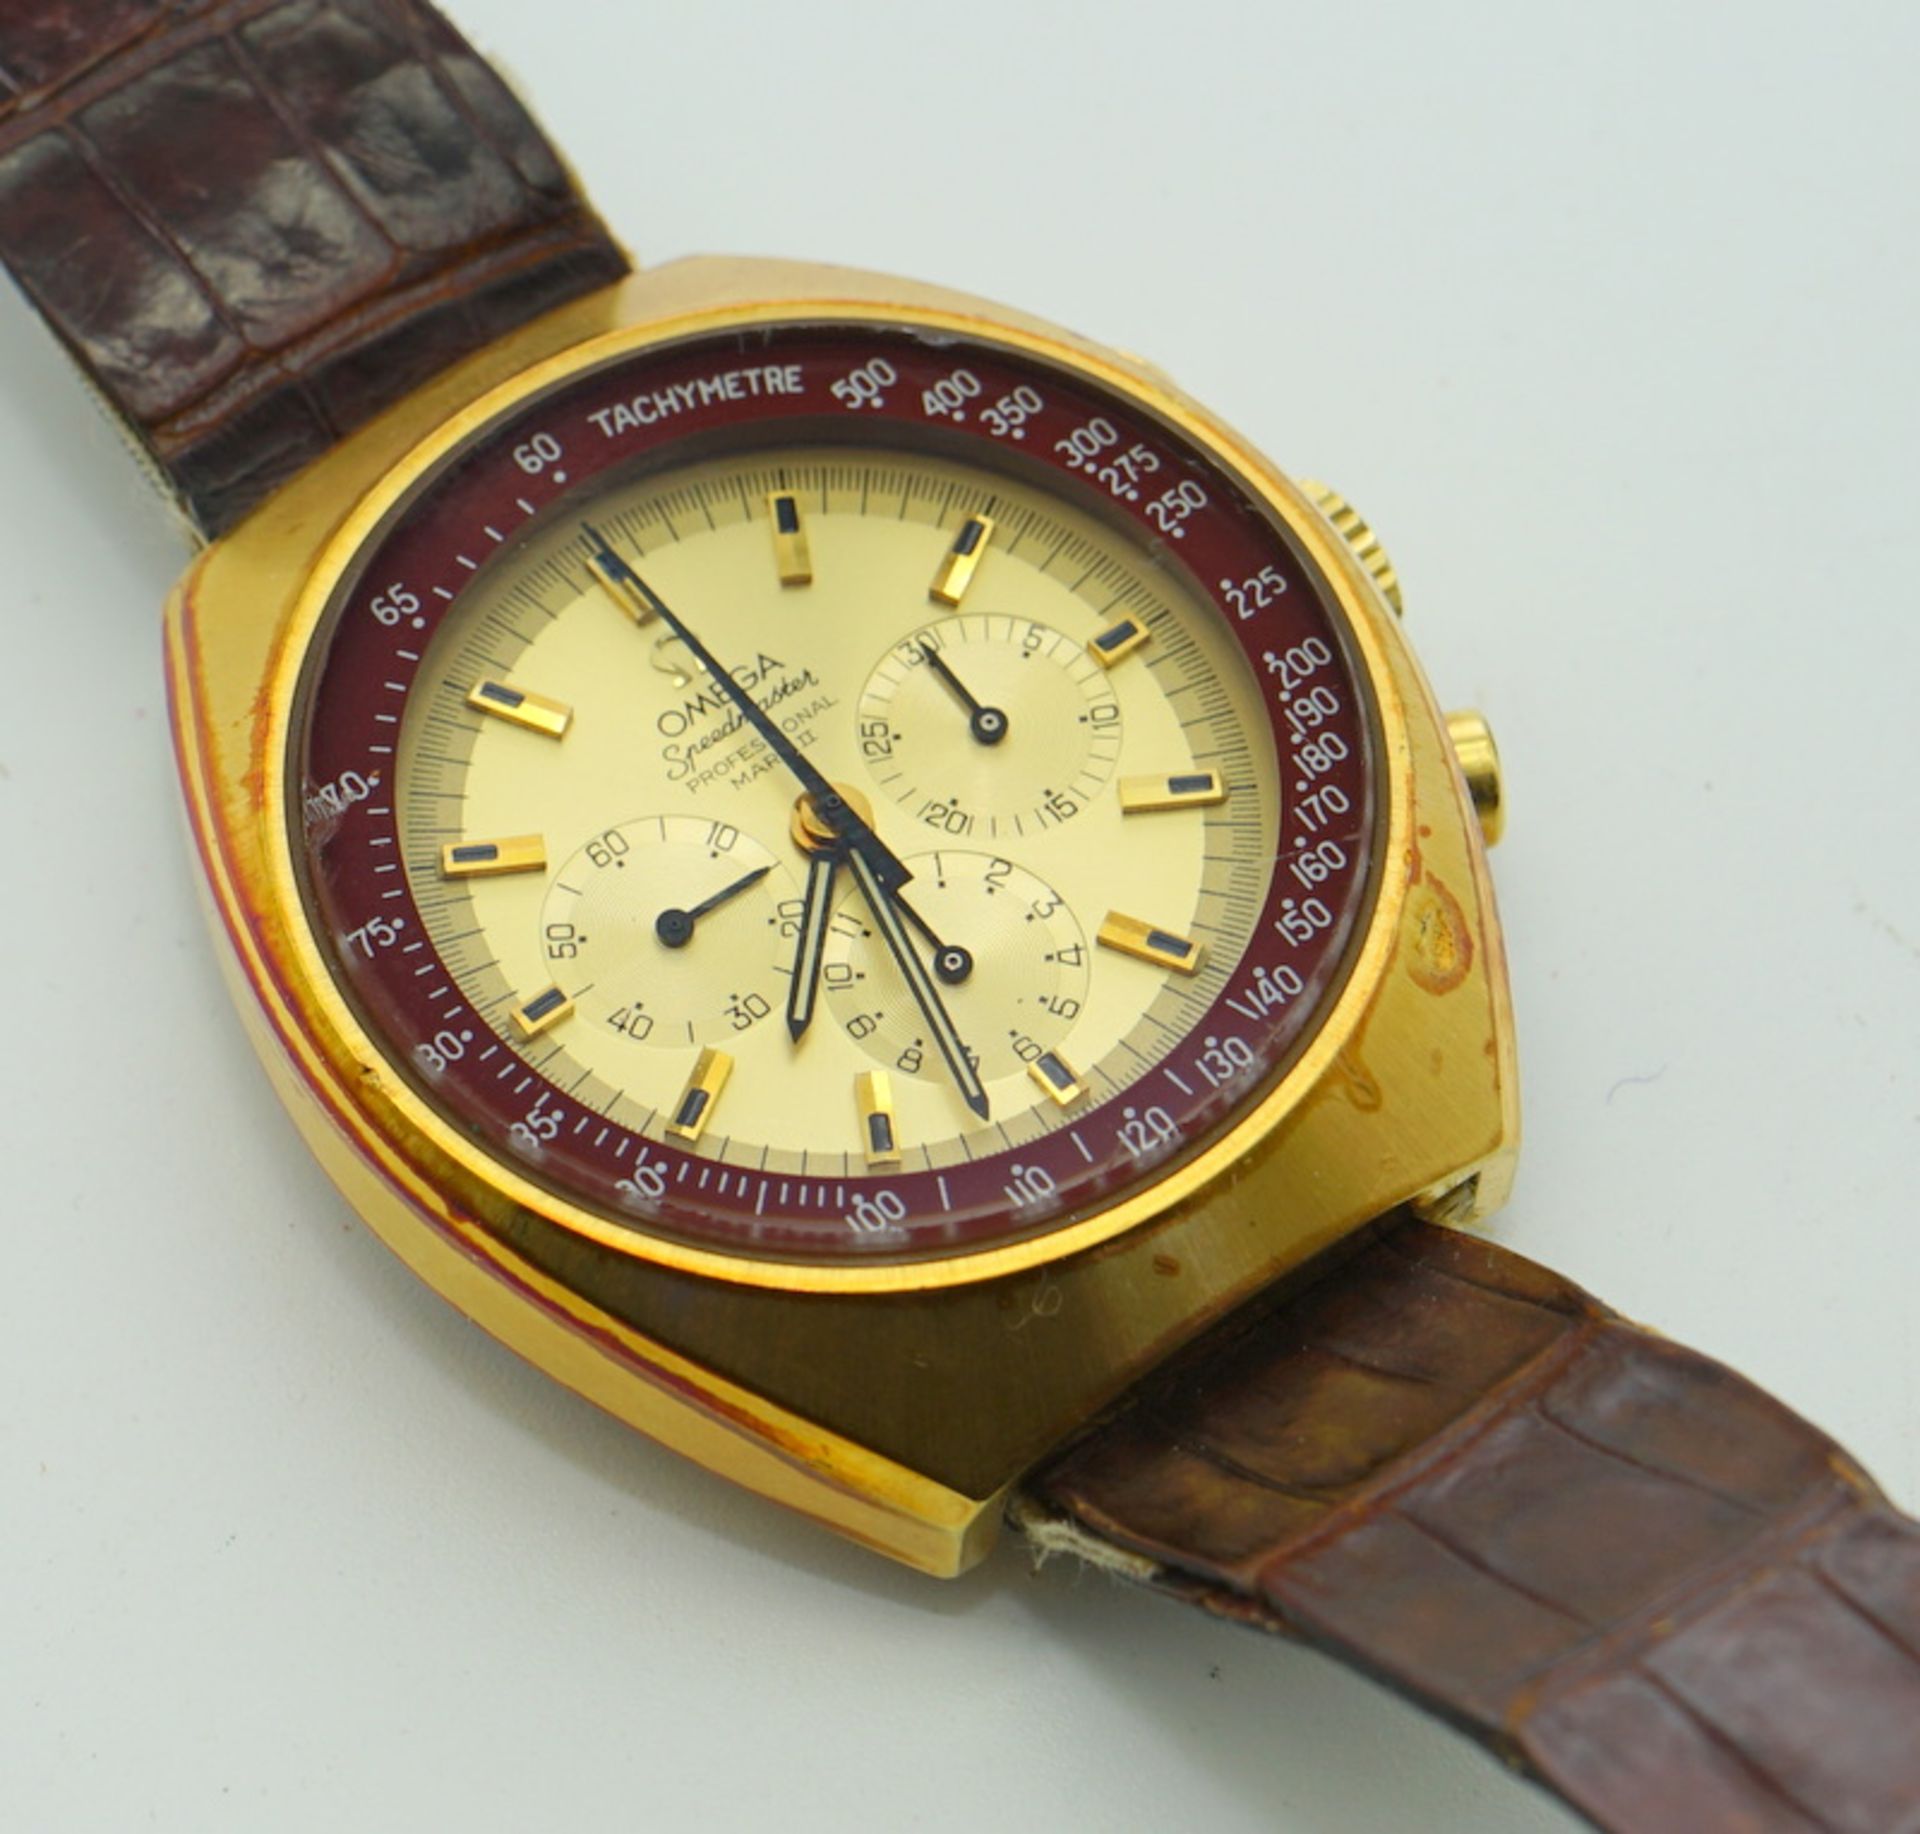 Omega, Uhrenmanufaktur: Seltene Speedmaster Professional Mark II, vergoldet, 1970er Jahre - Image 3 of 3